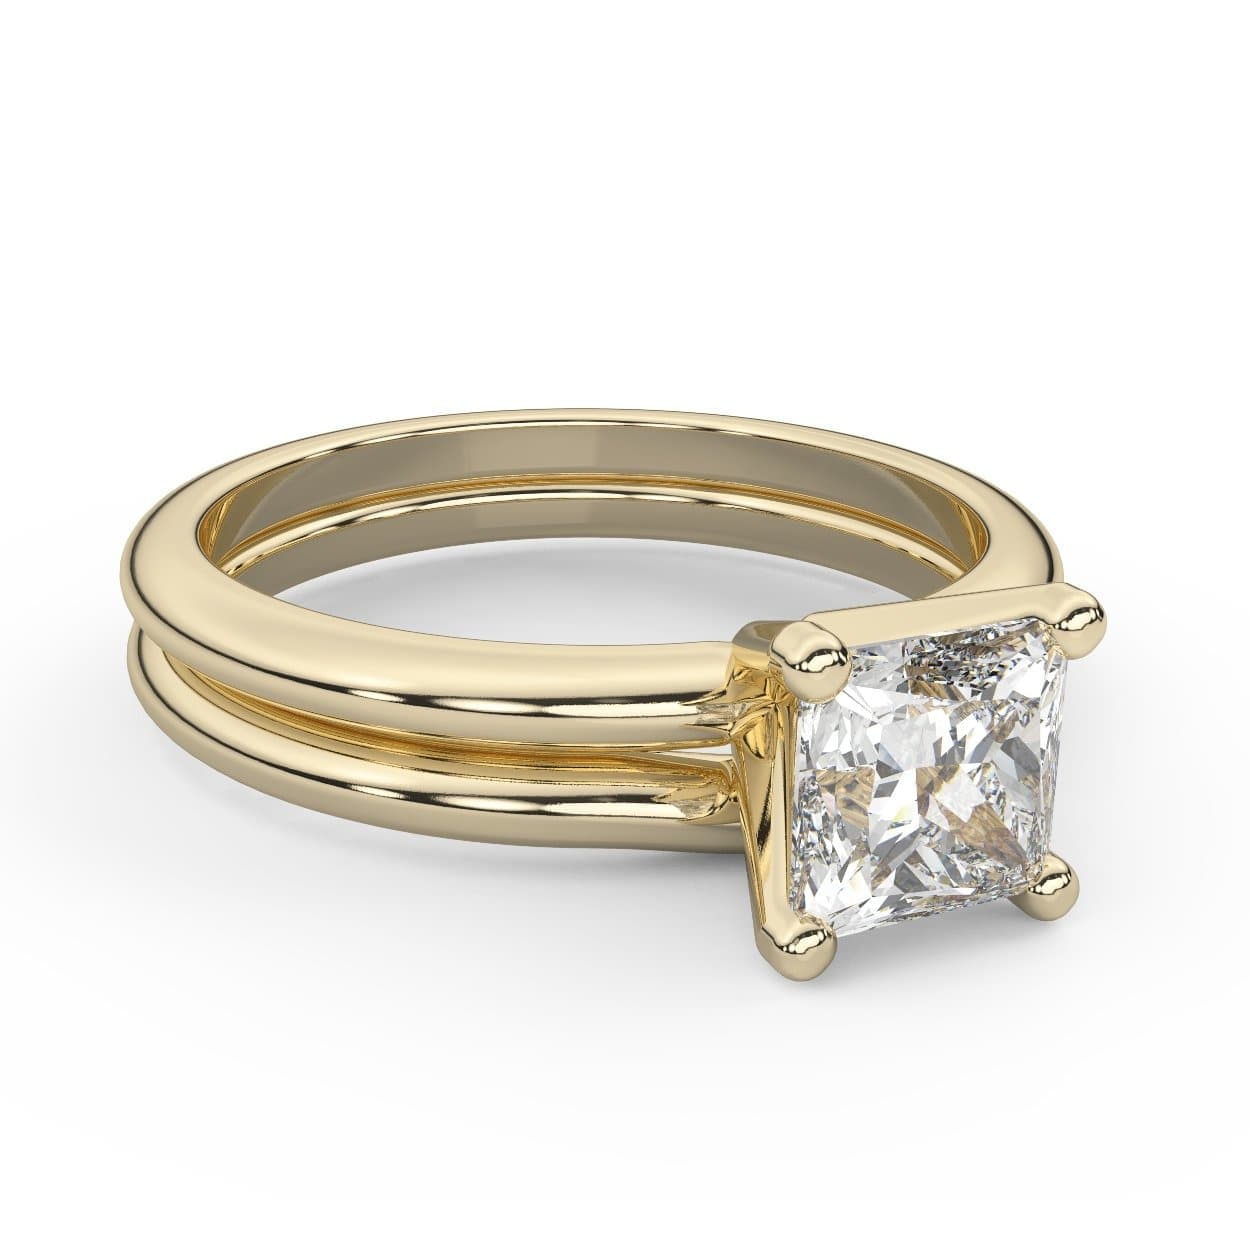 Princess Cut Diamond Wedding Set in 14k Gold